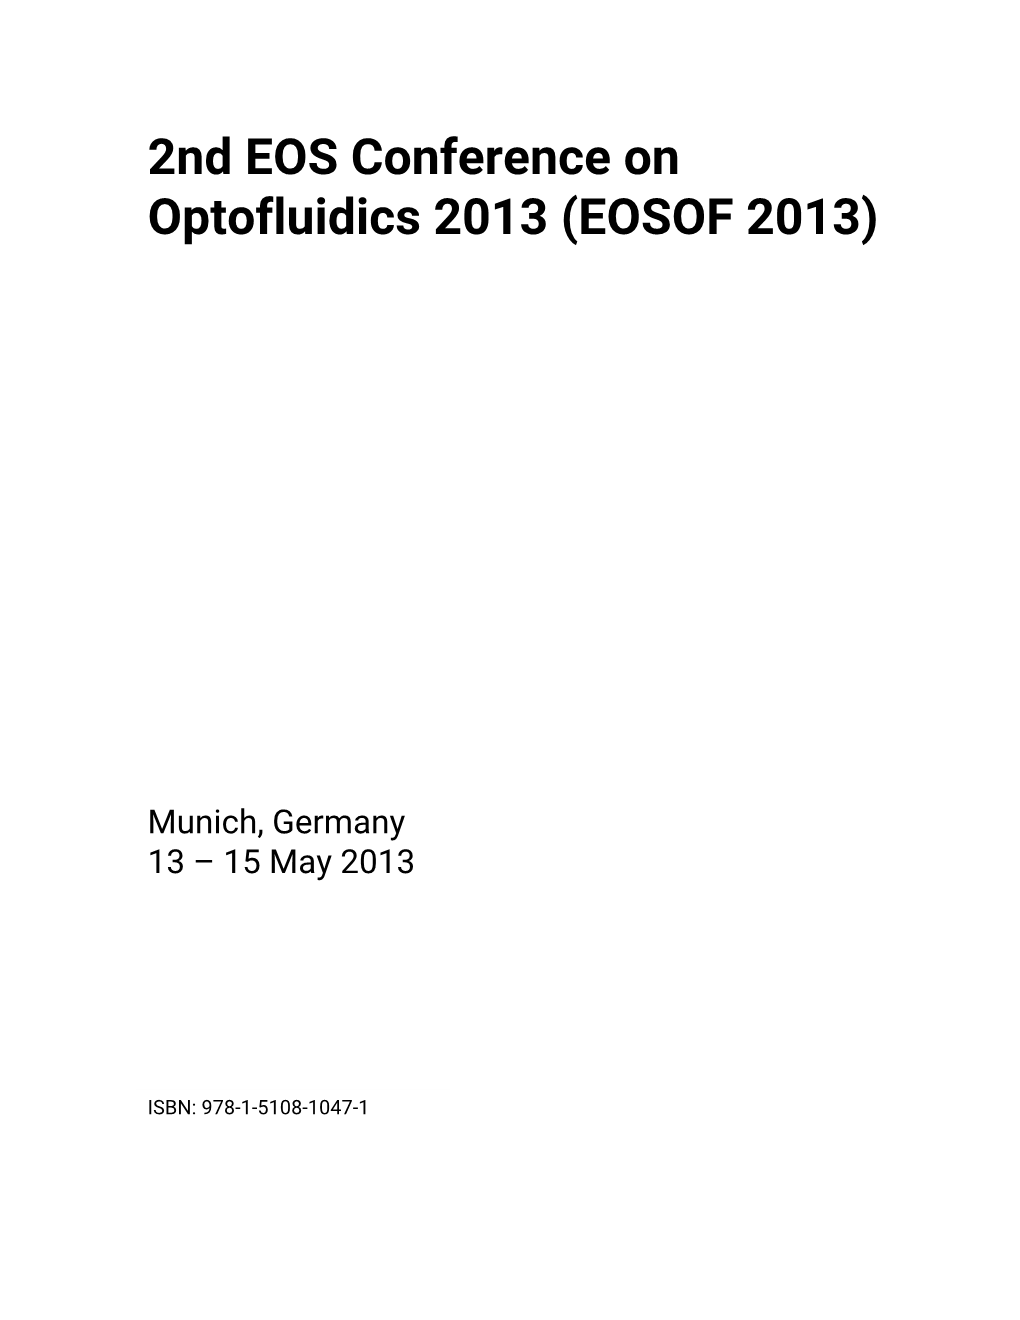 2Nd EOS Conference on Optofluidics 2013